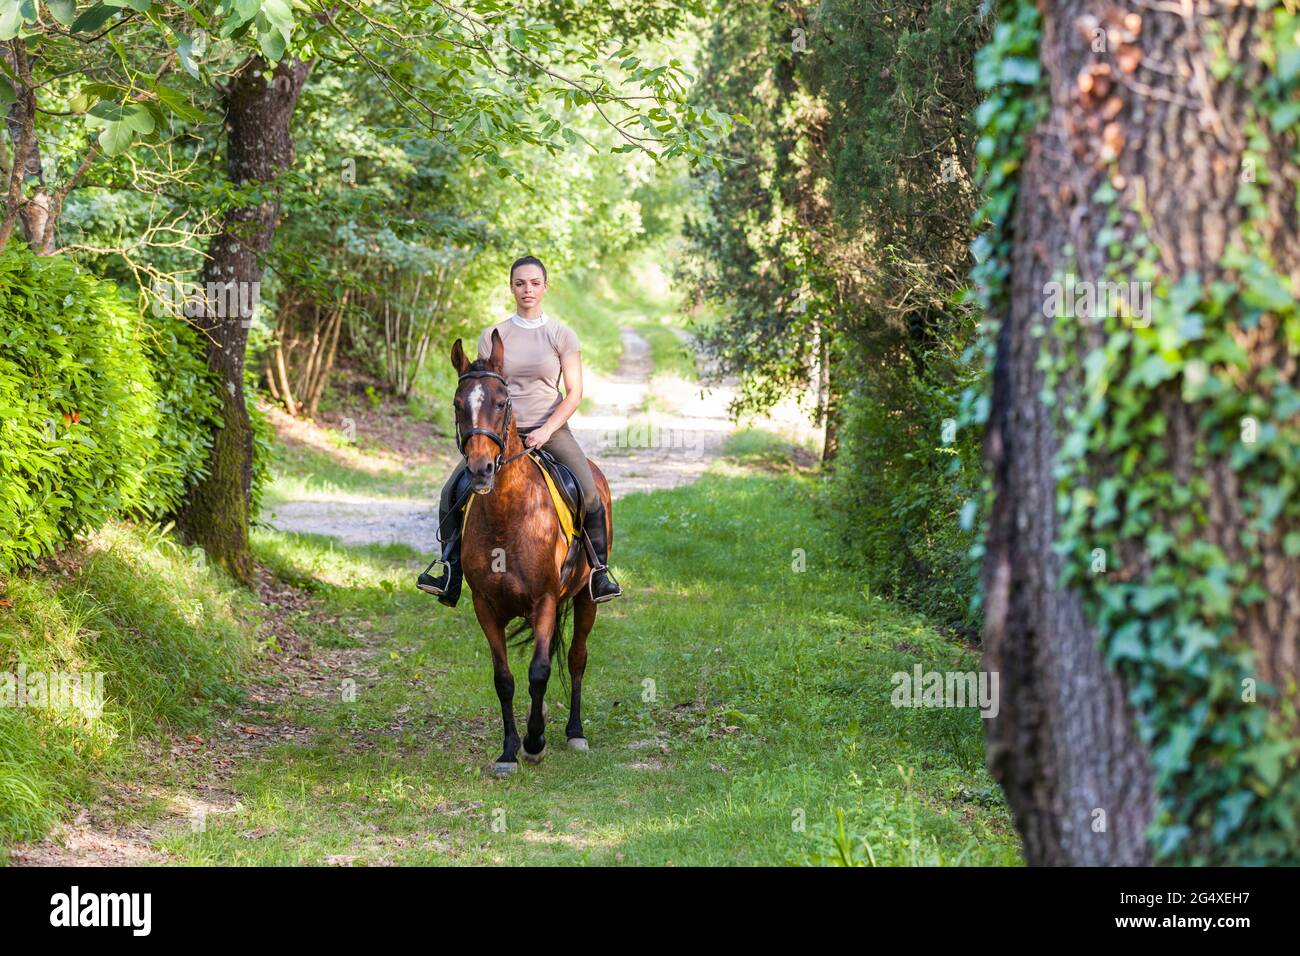 Woman riding on horseback at grass area Stock Photo